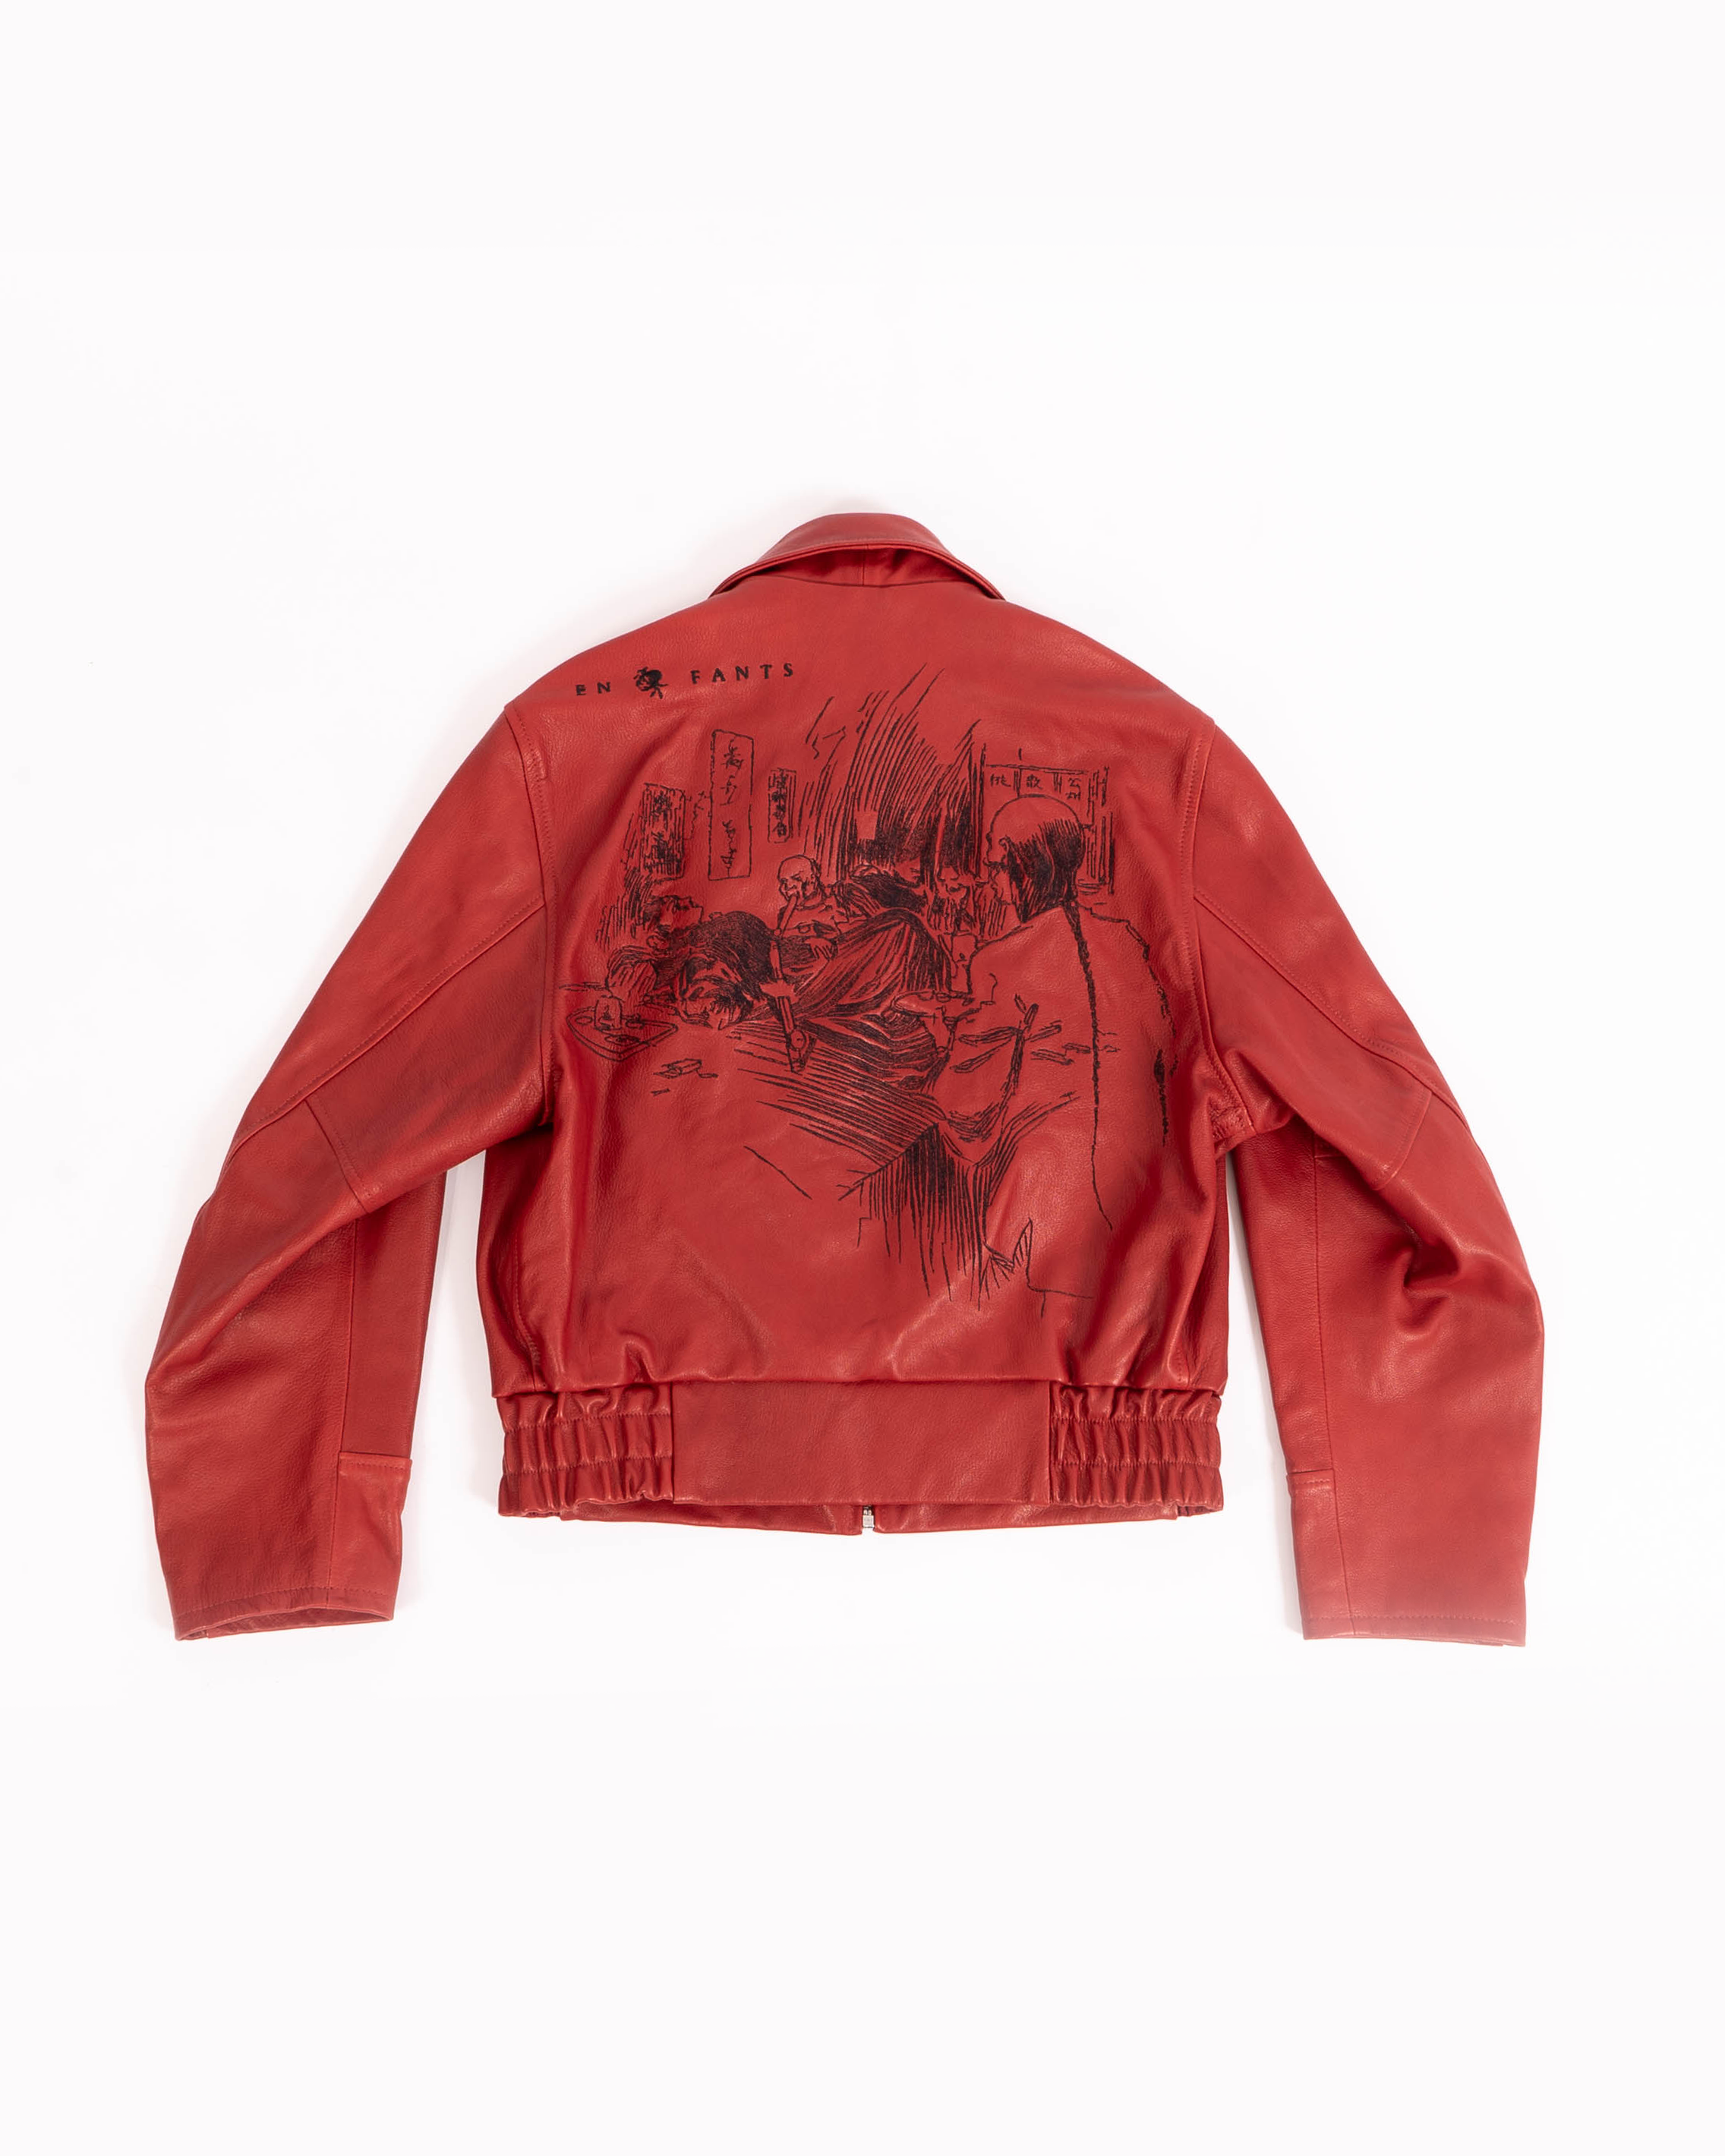 FW23 Opium Den Frank Leather Jacket Red